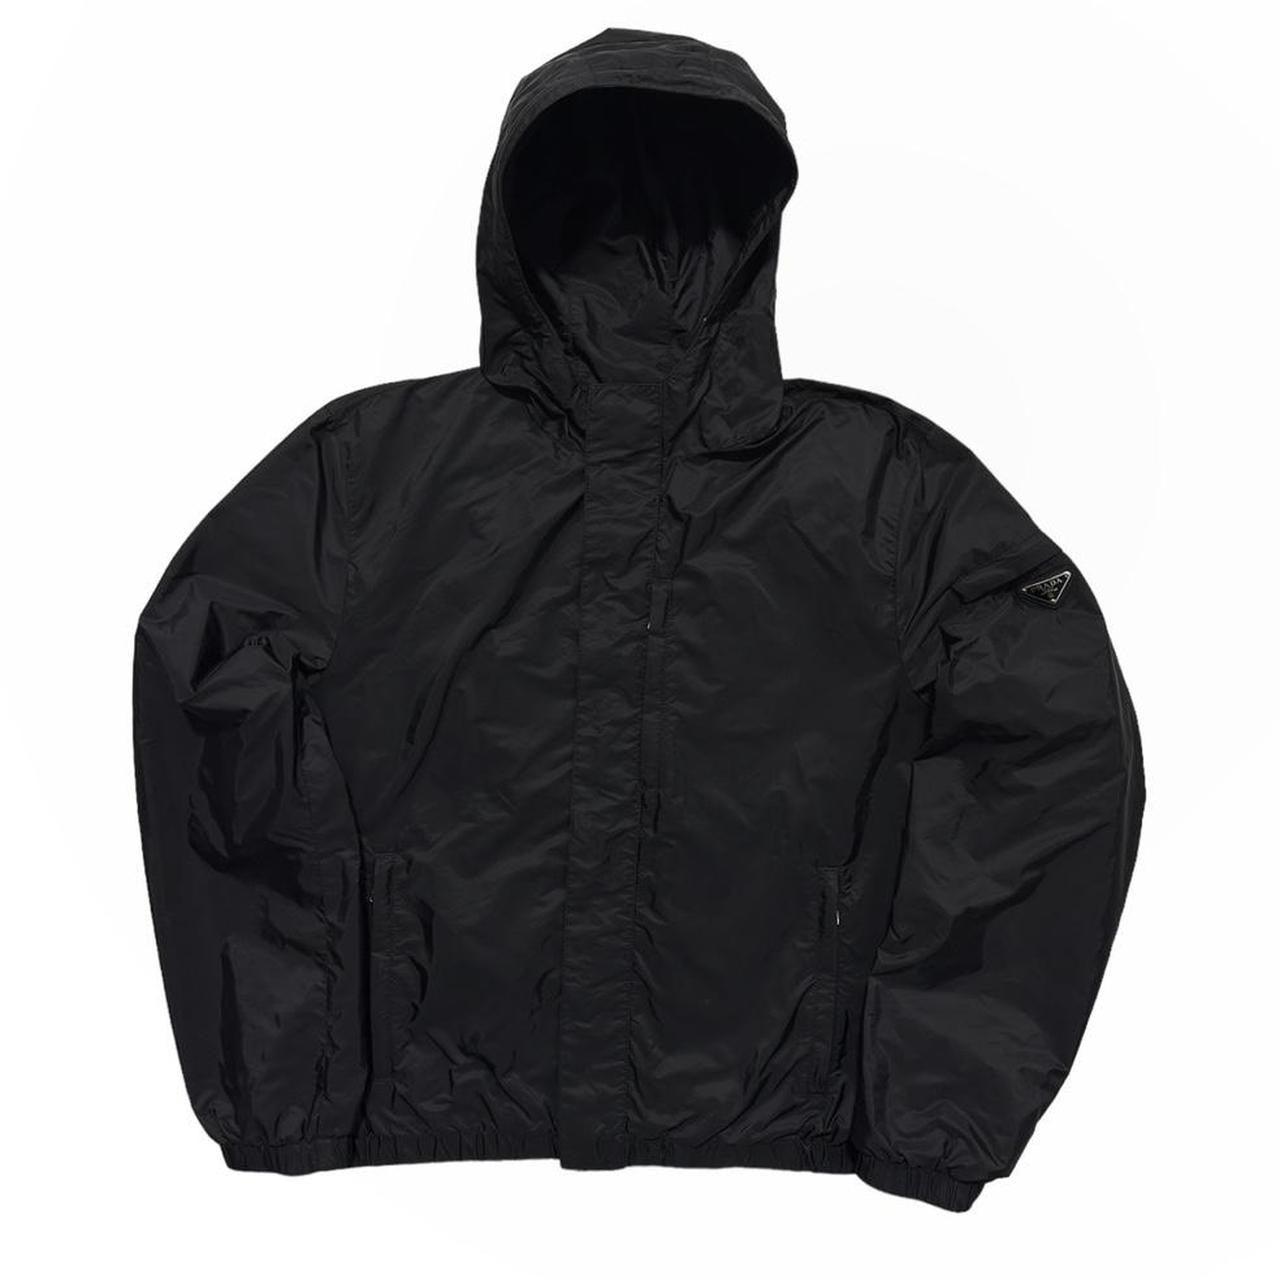 Prada S/S 2019 Nylon Black Jacket - Known Source